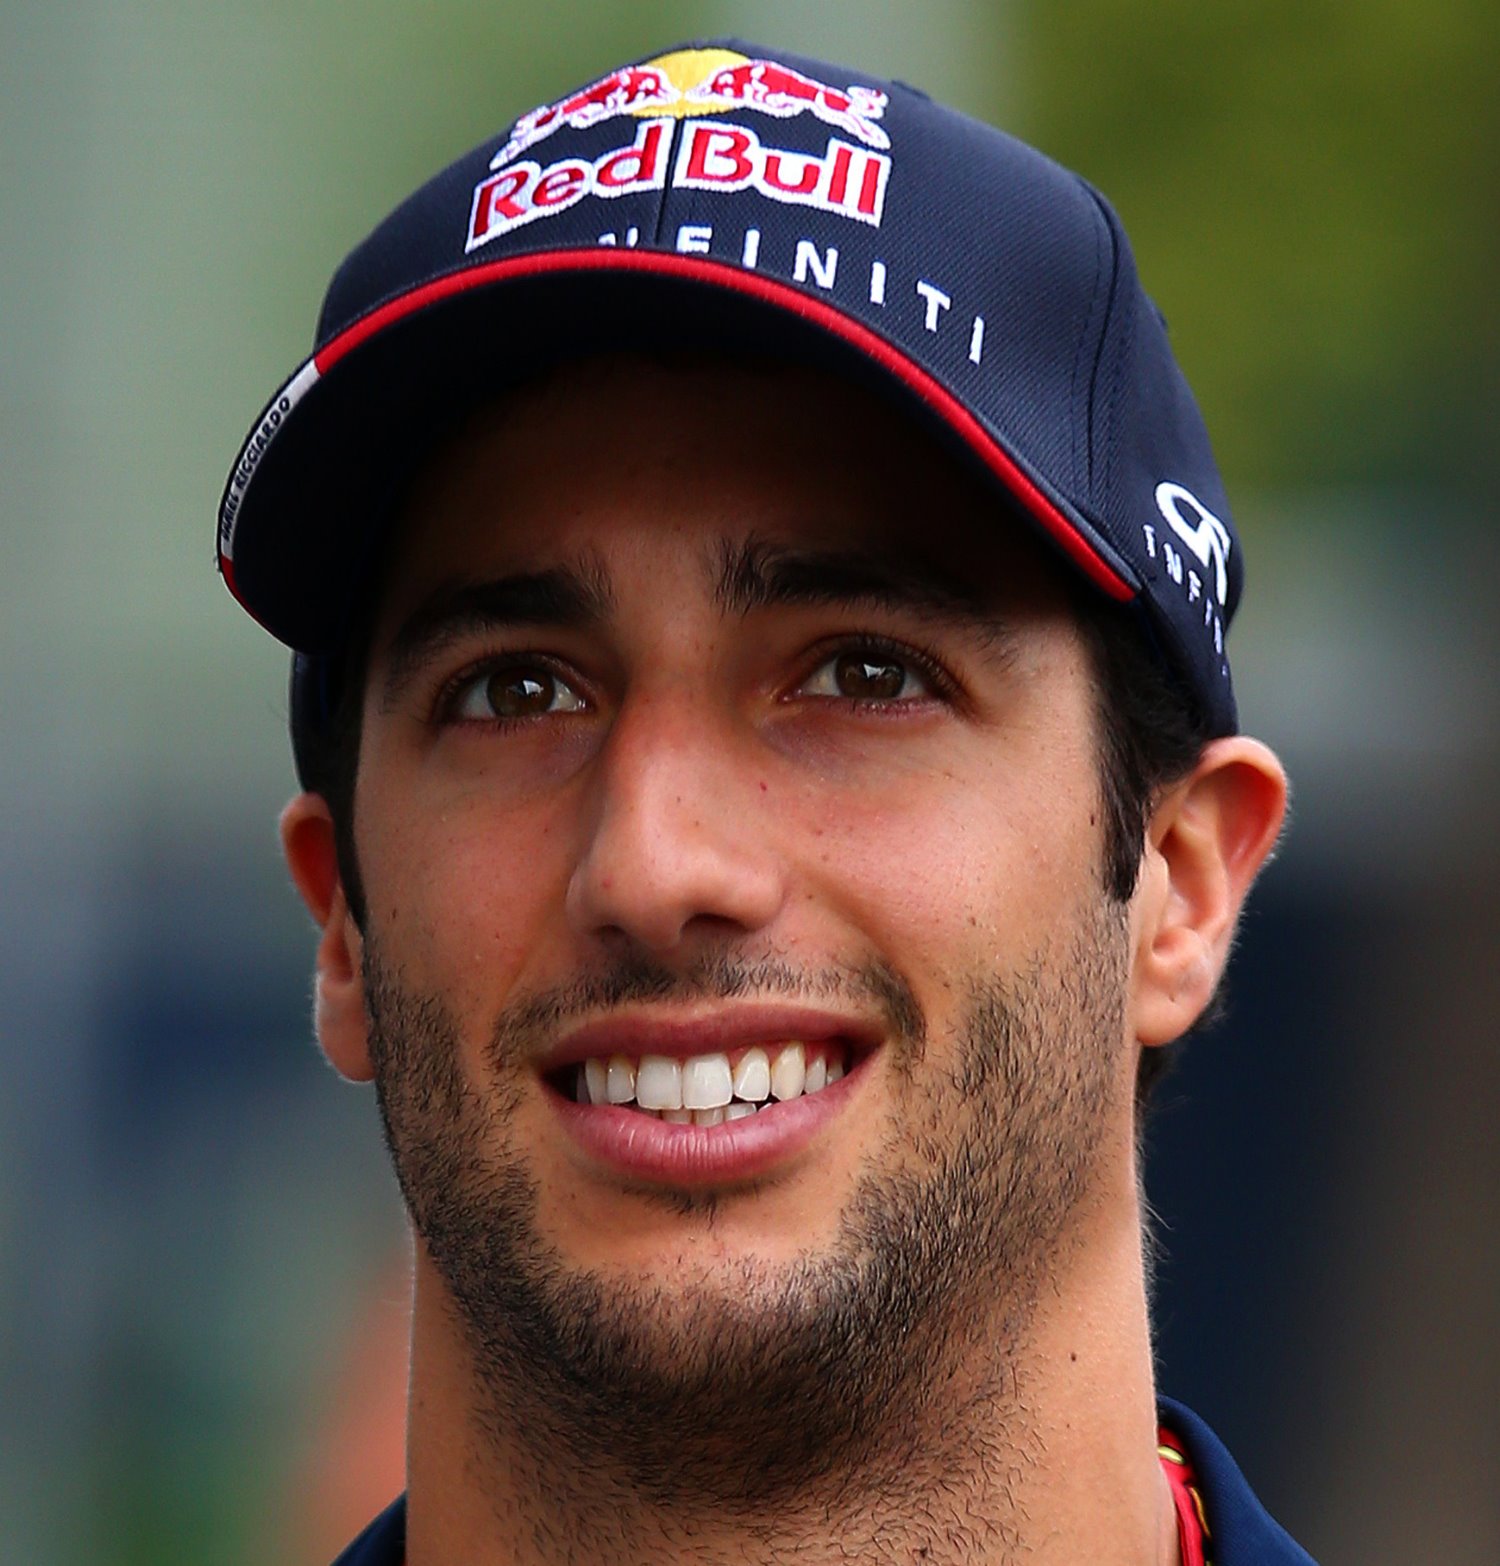 Ricciardo - an Italian with Australian citizenship, would fit in perfectly at Ferrari